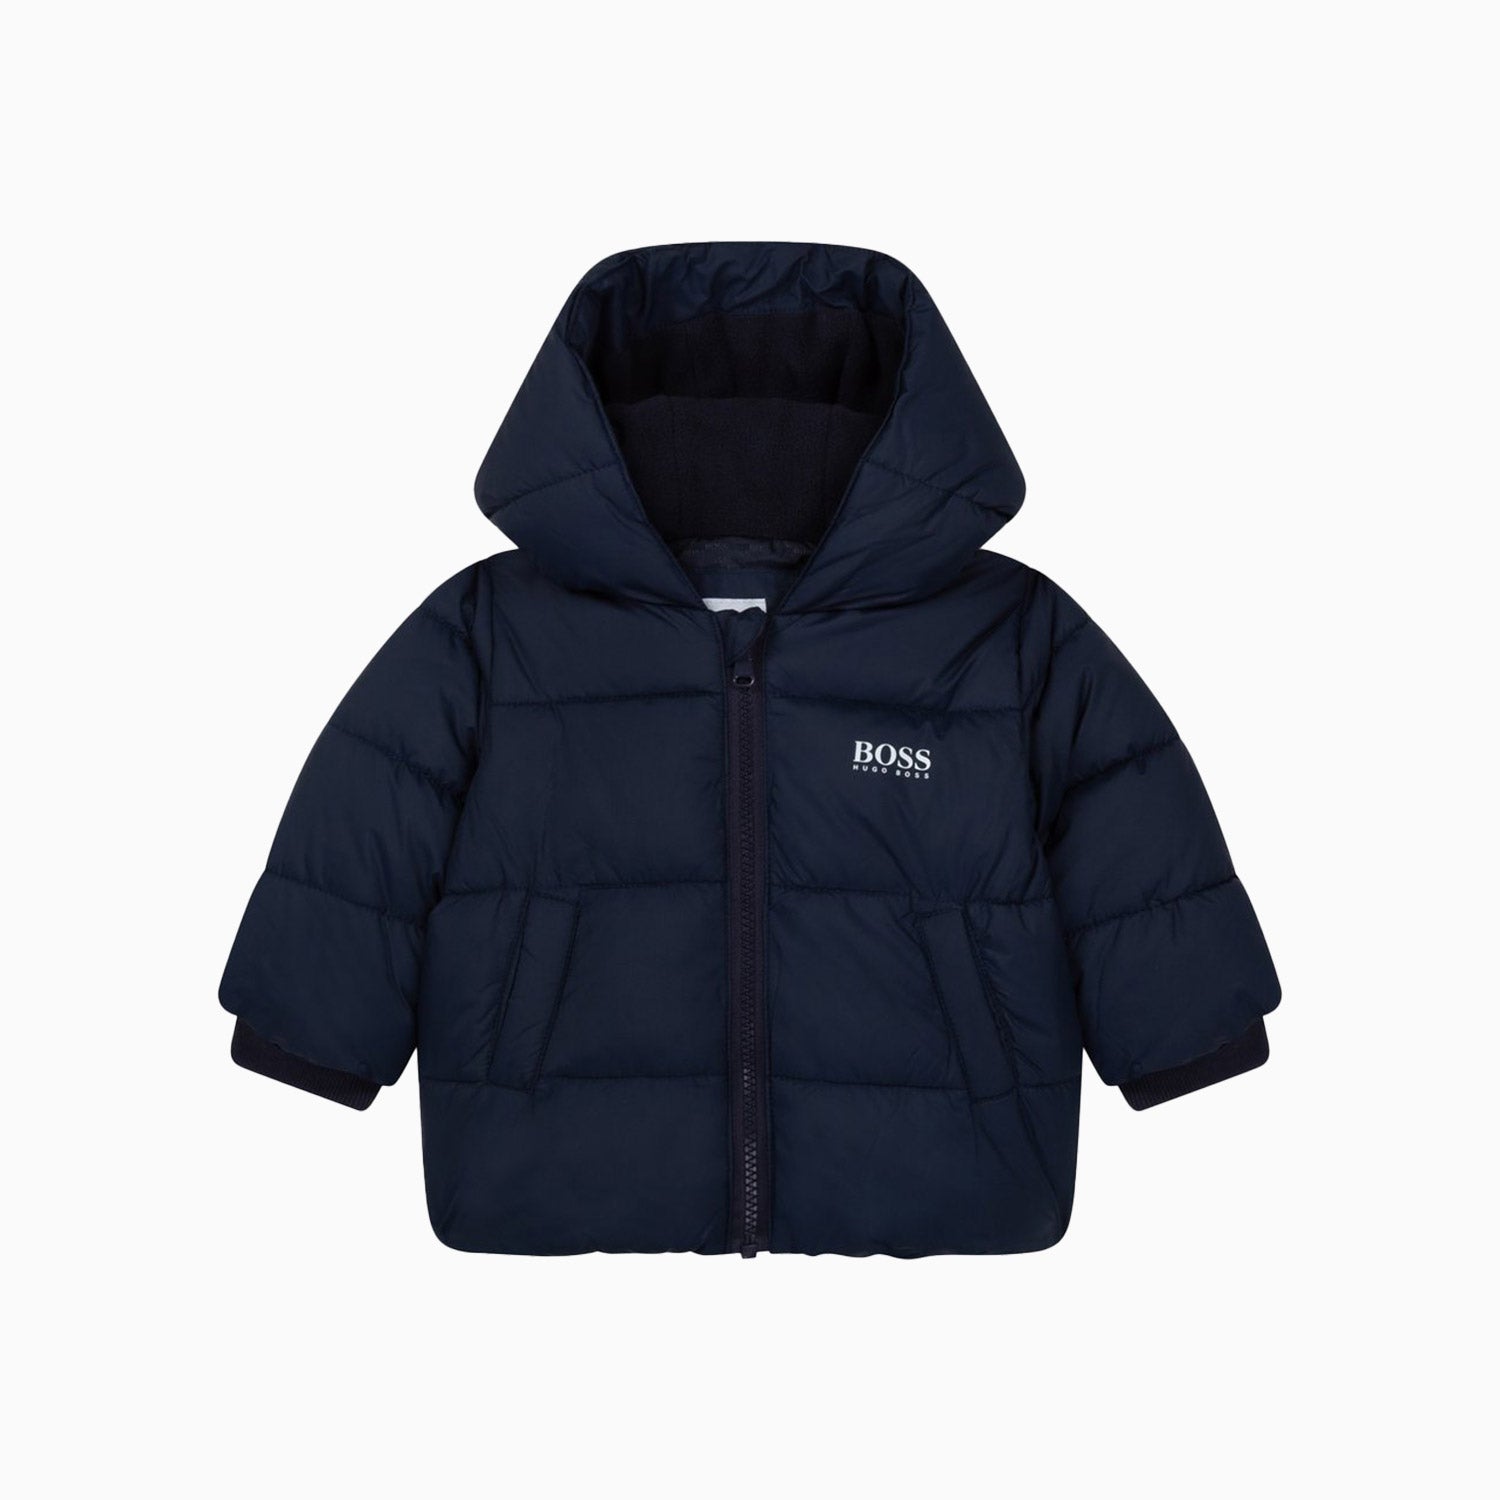 Hugo Boss Kid's Hooded Puffer Jacket - Color: Navy Blue - Kids Premium Clothing -